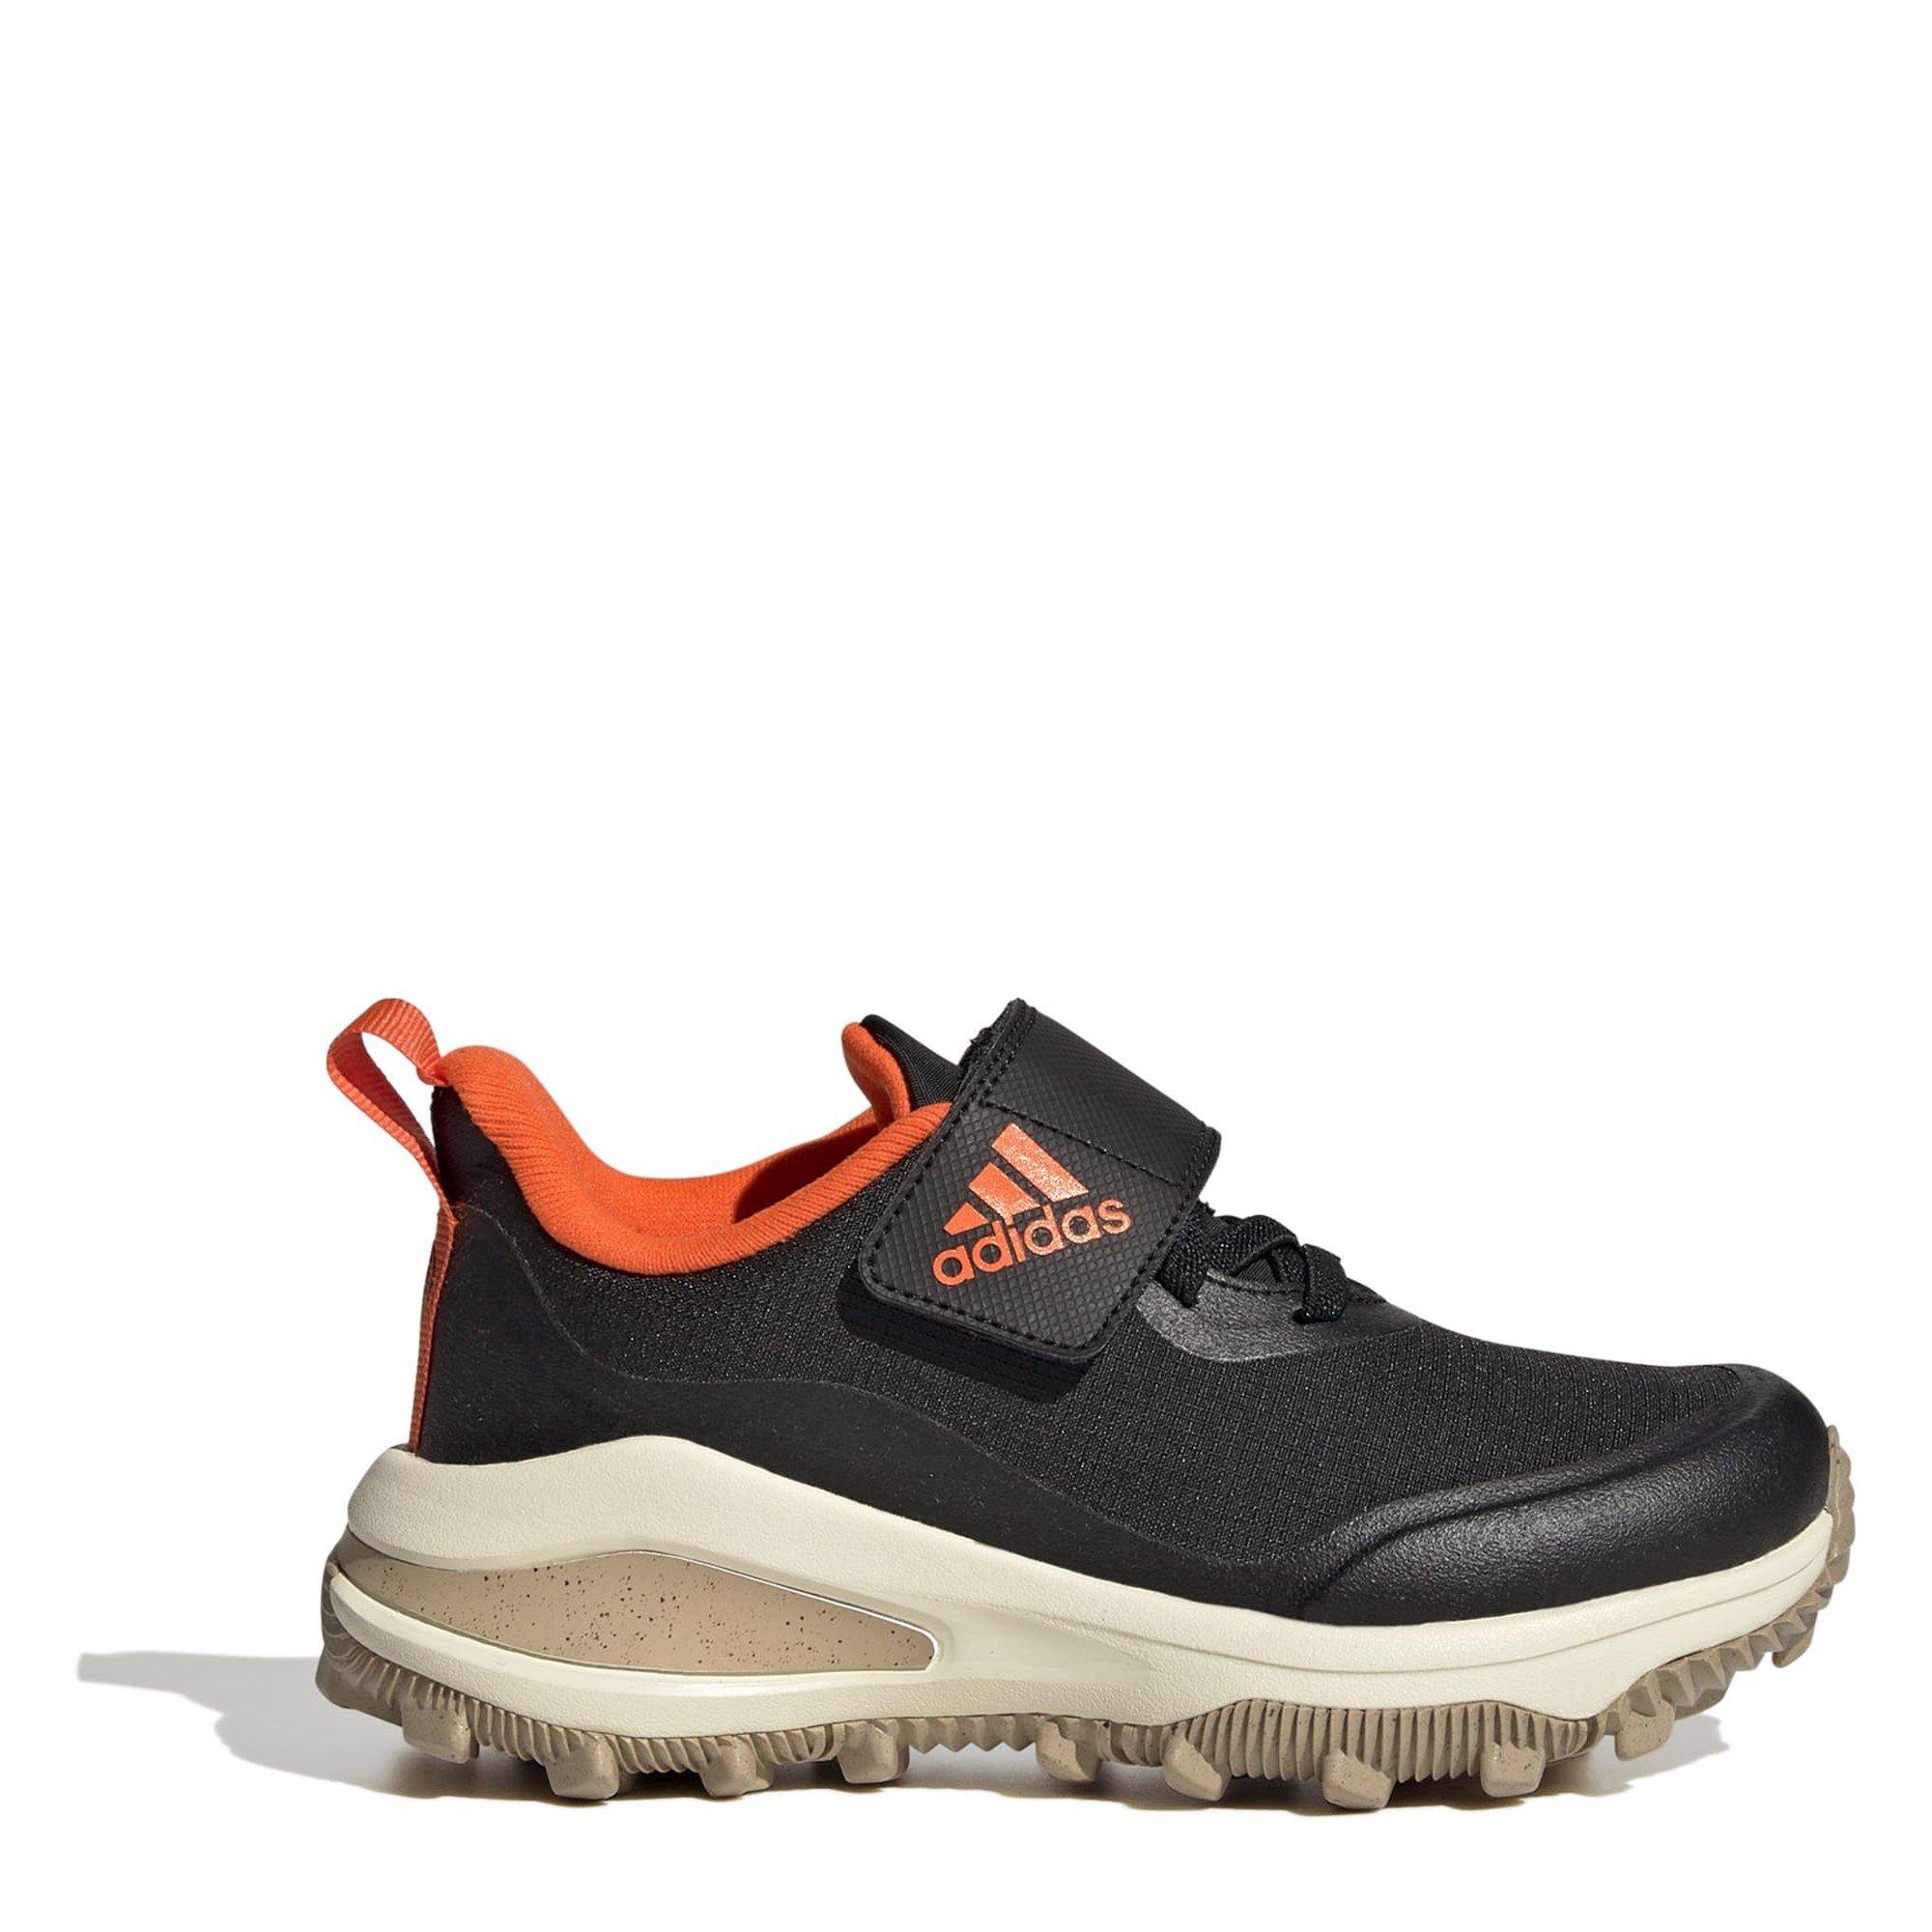 Fortarun All-Terrain Cloudfoam Sport Running Elast Road Shoes Unisex Adults